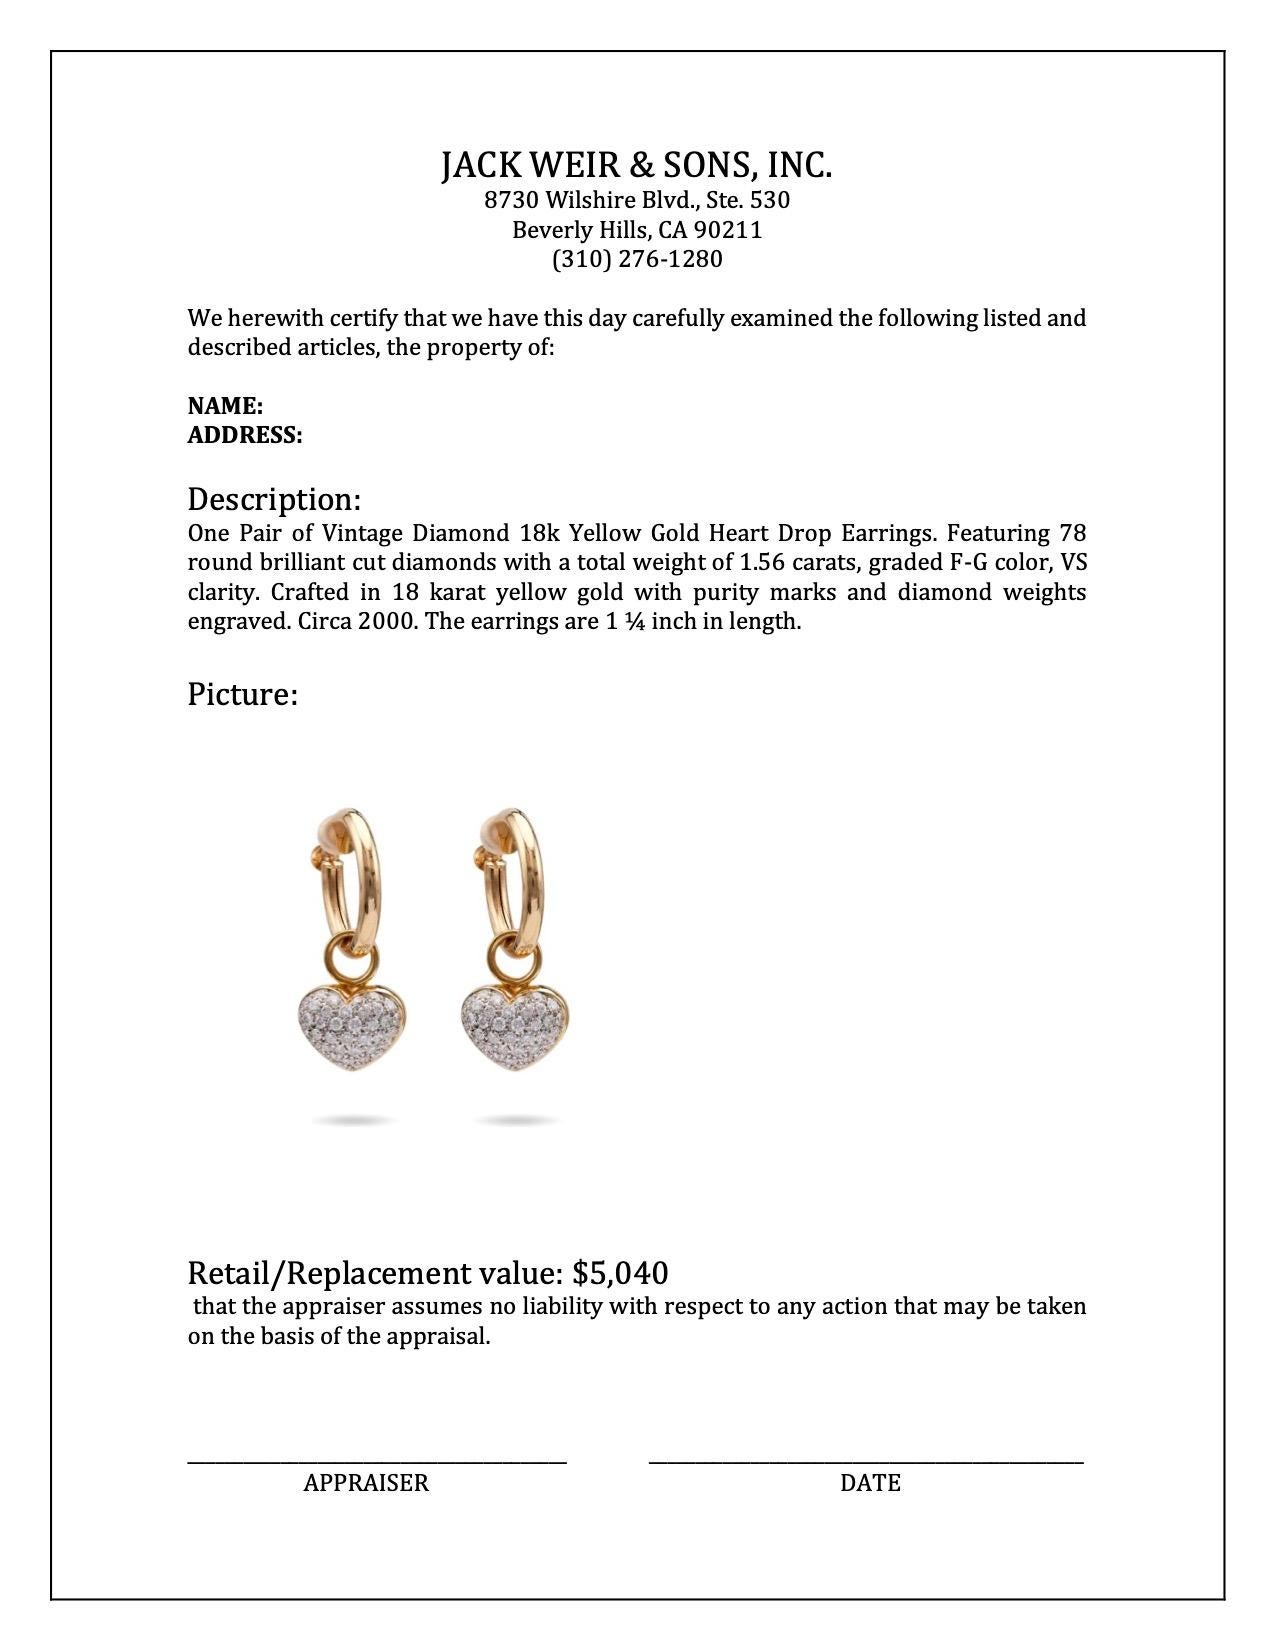 Women's or Men's Pair of Vintage Diamond 18k Yellow Gold Heart Drop Earrings For Sale